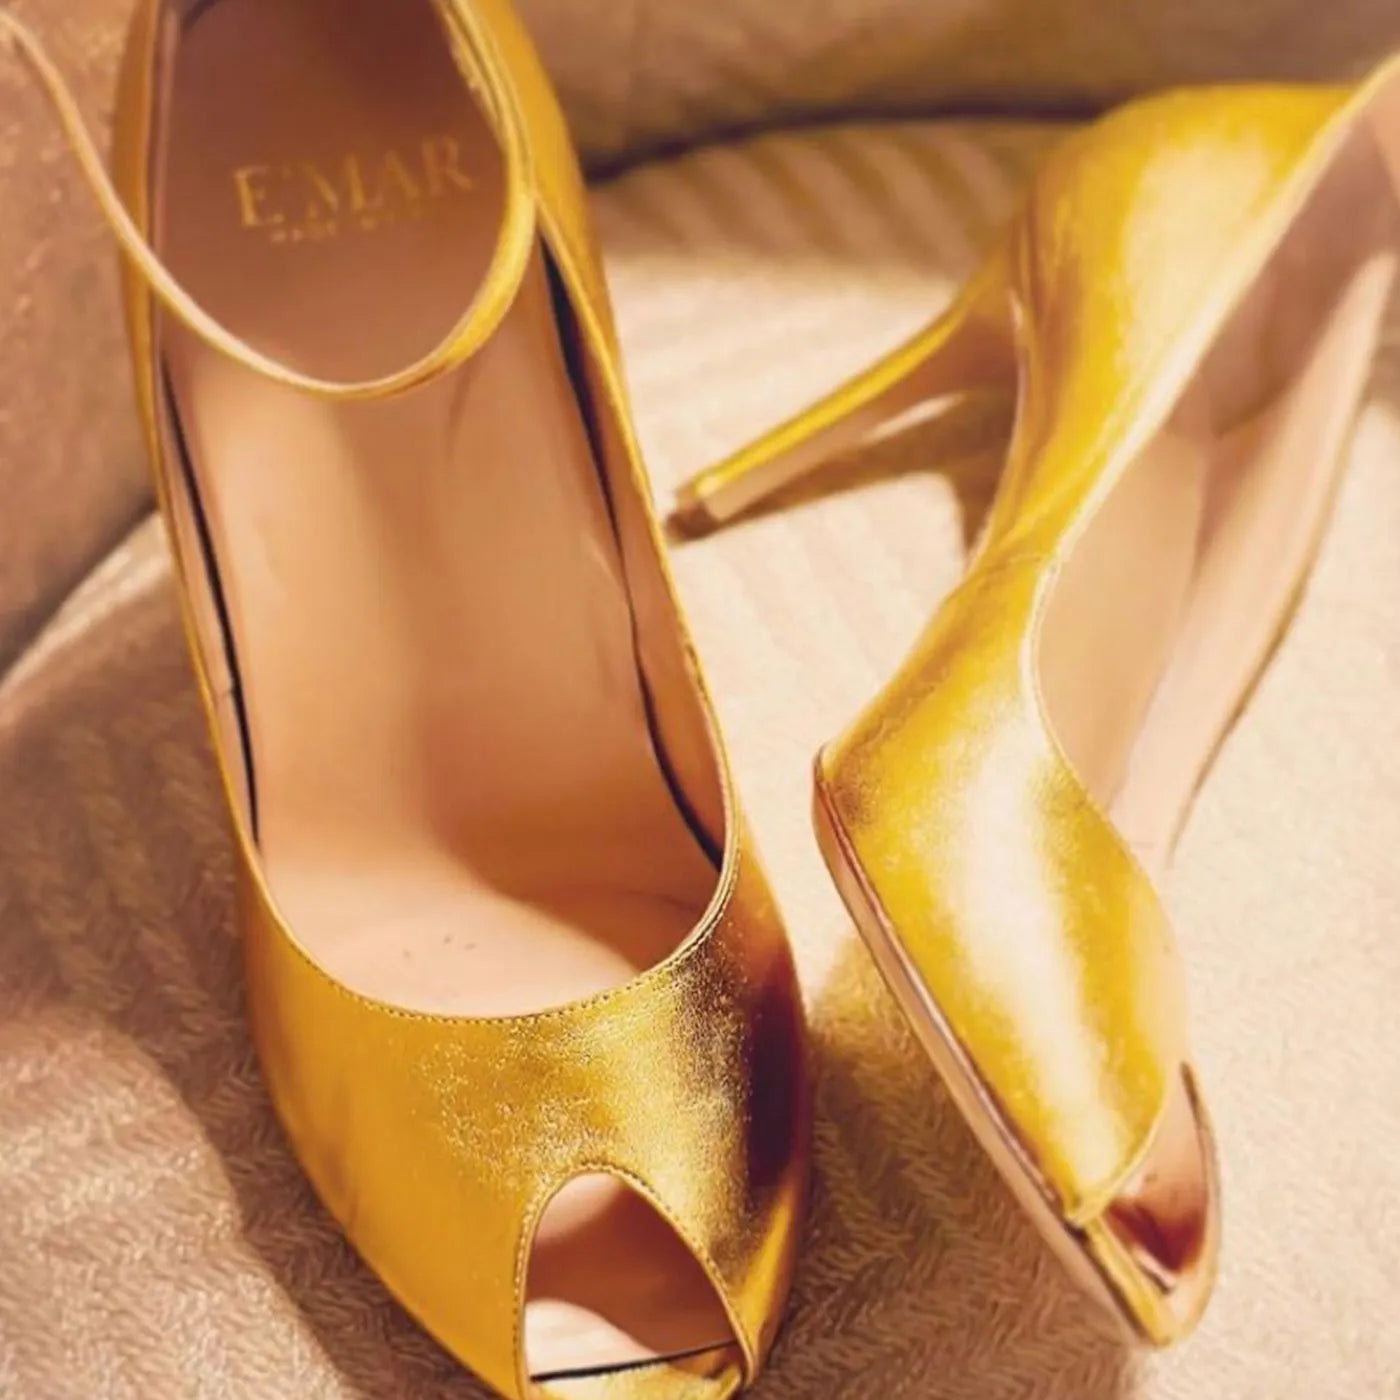 Gold Raya Ankle Strap Pump Heels